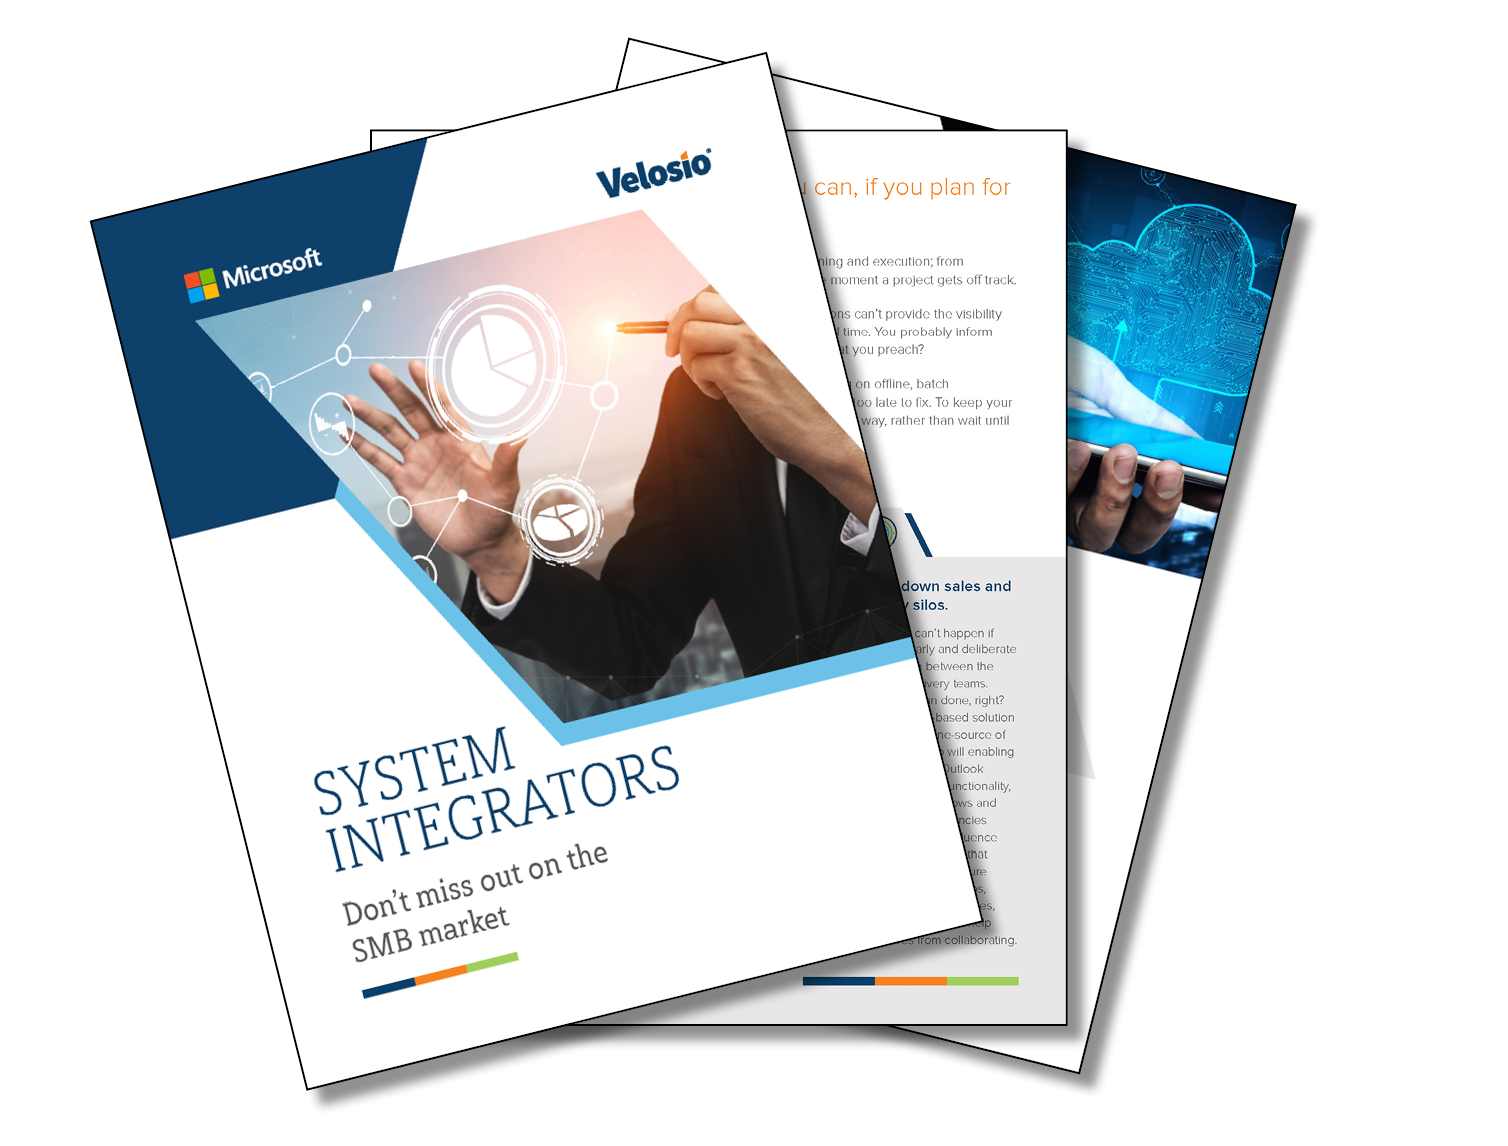 SMB market for System Integrators